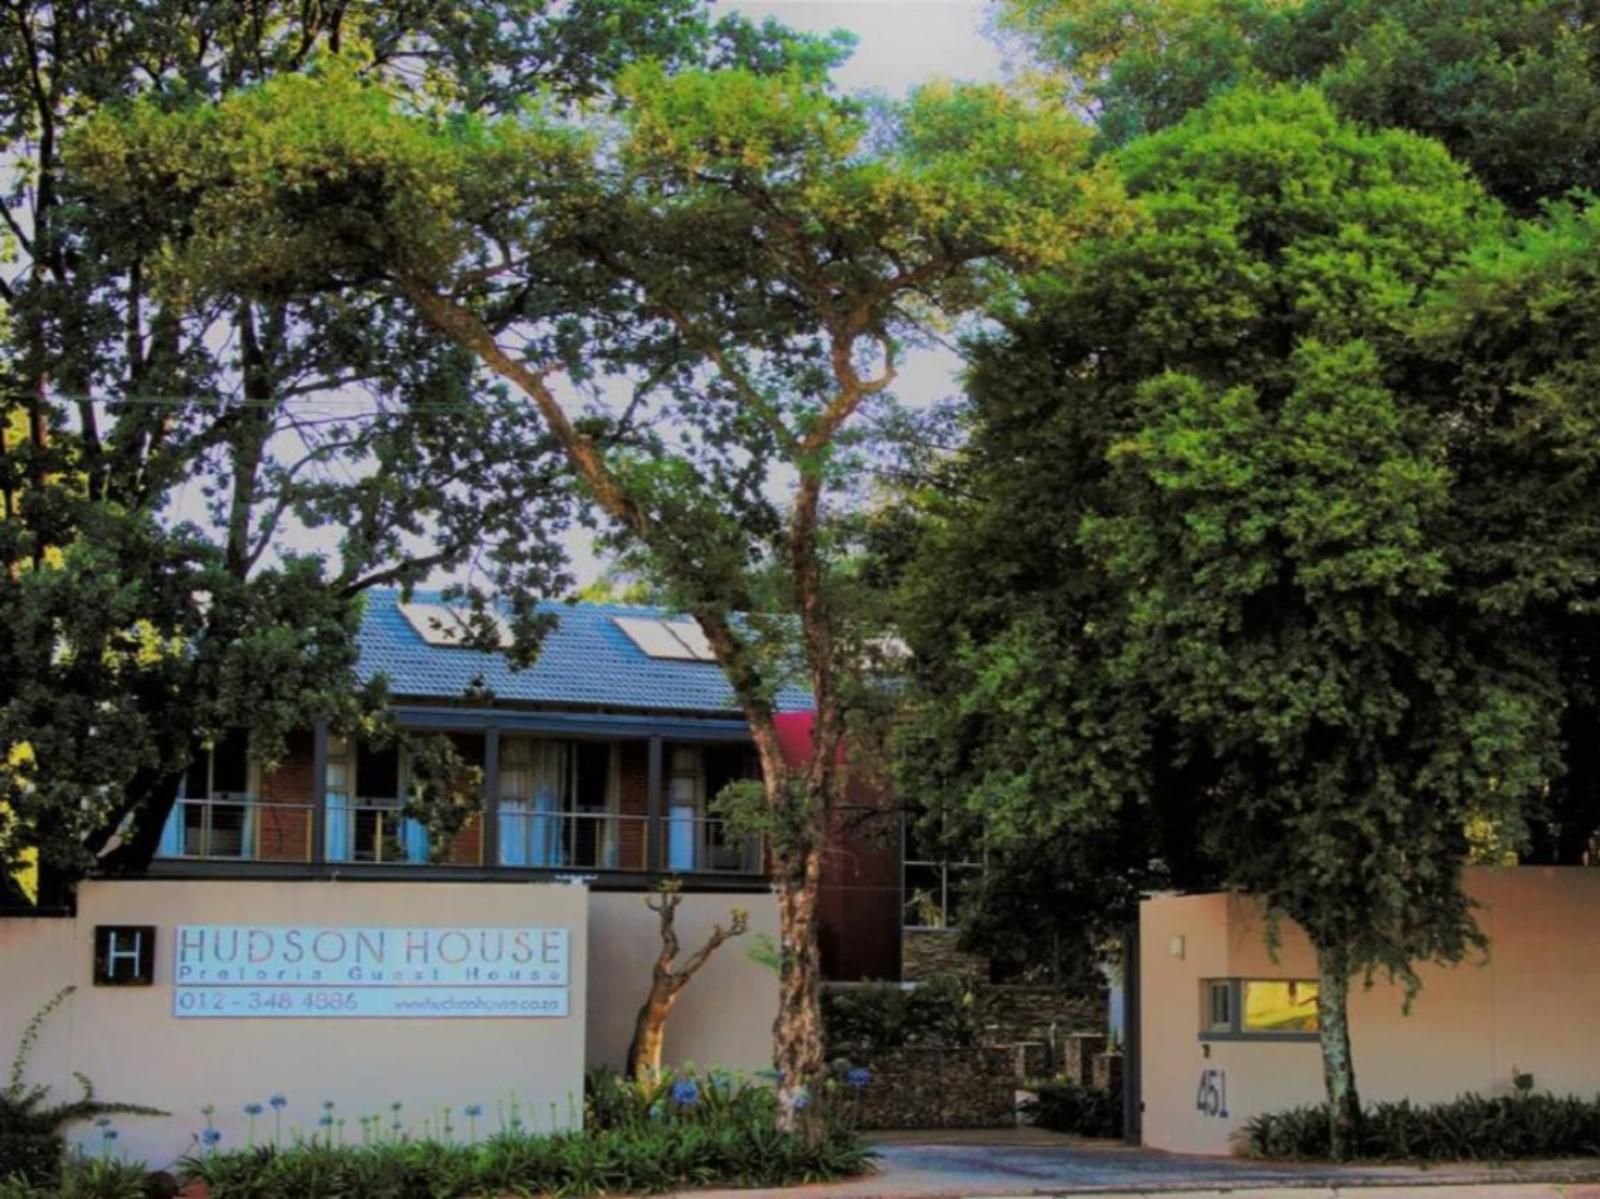 Hudson House Lynnwood Pretoria Tshwane Gauteng South Africa Building, Architecture, House, Palm Tree, Plant, Nature, Wood, Window